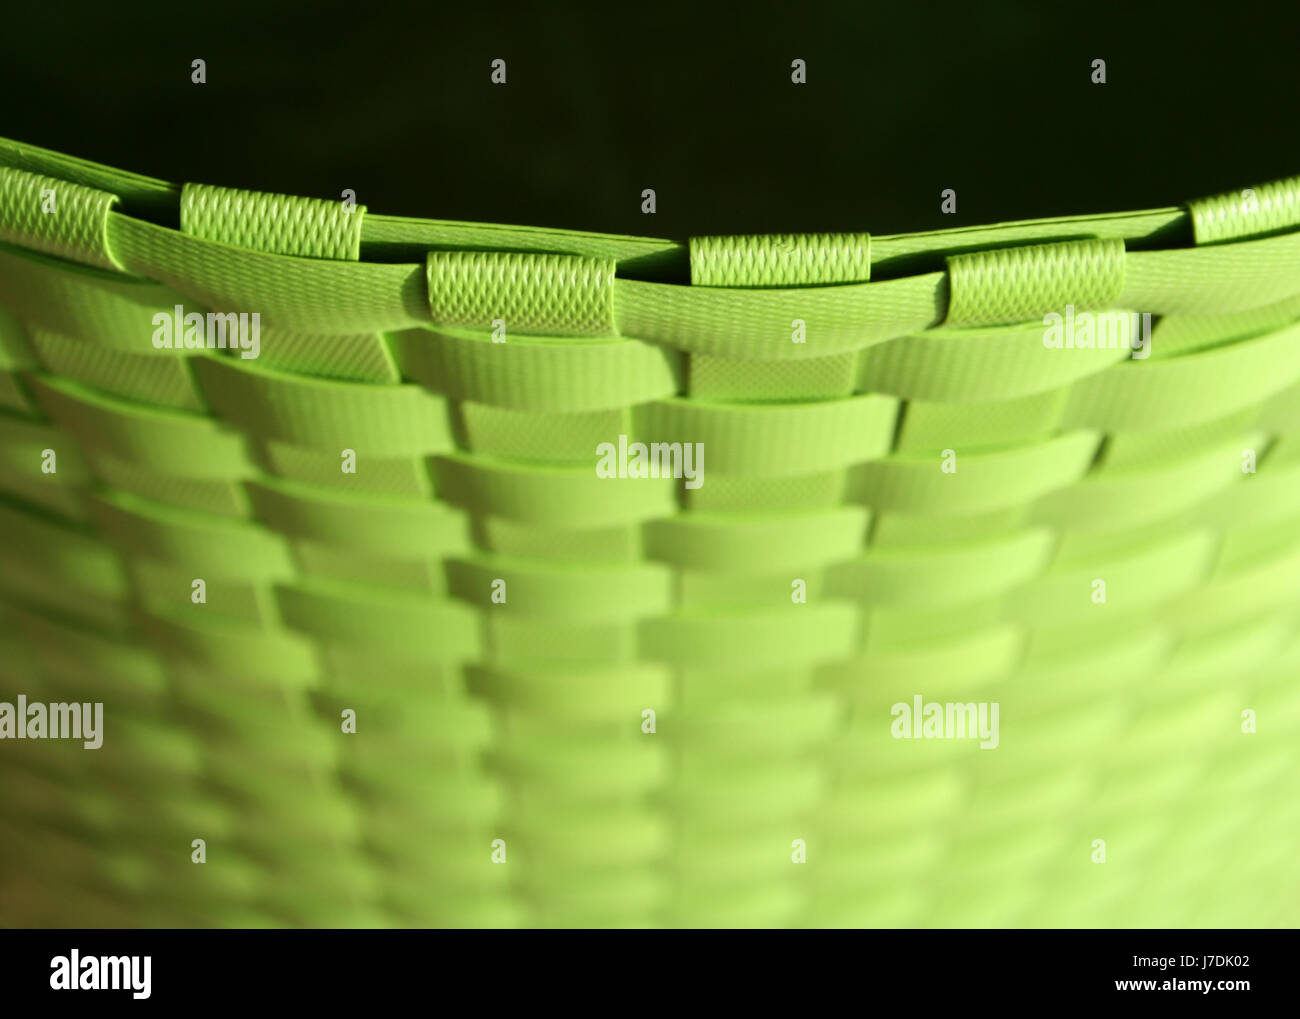 grünen Korb Behälter netting Struktur grüne Detail Eintritt Korb Kontrast Stockfoto